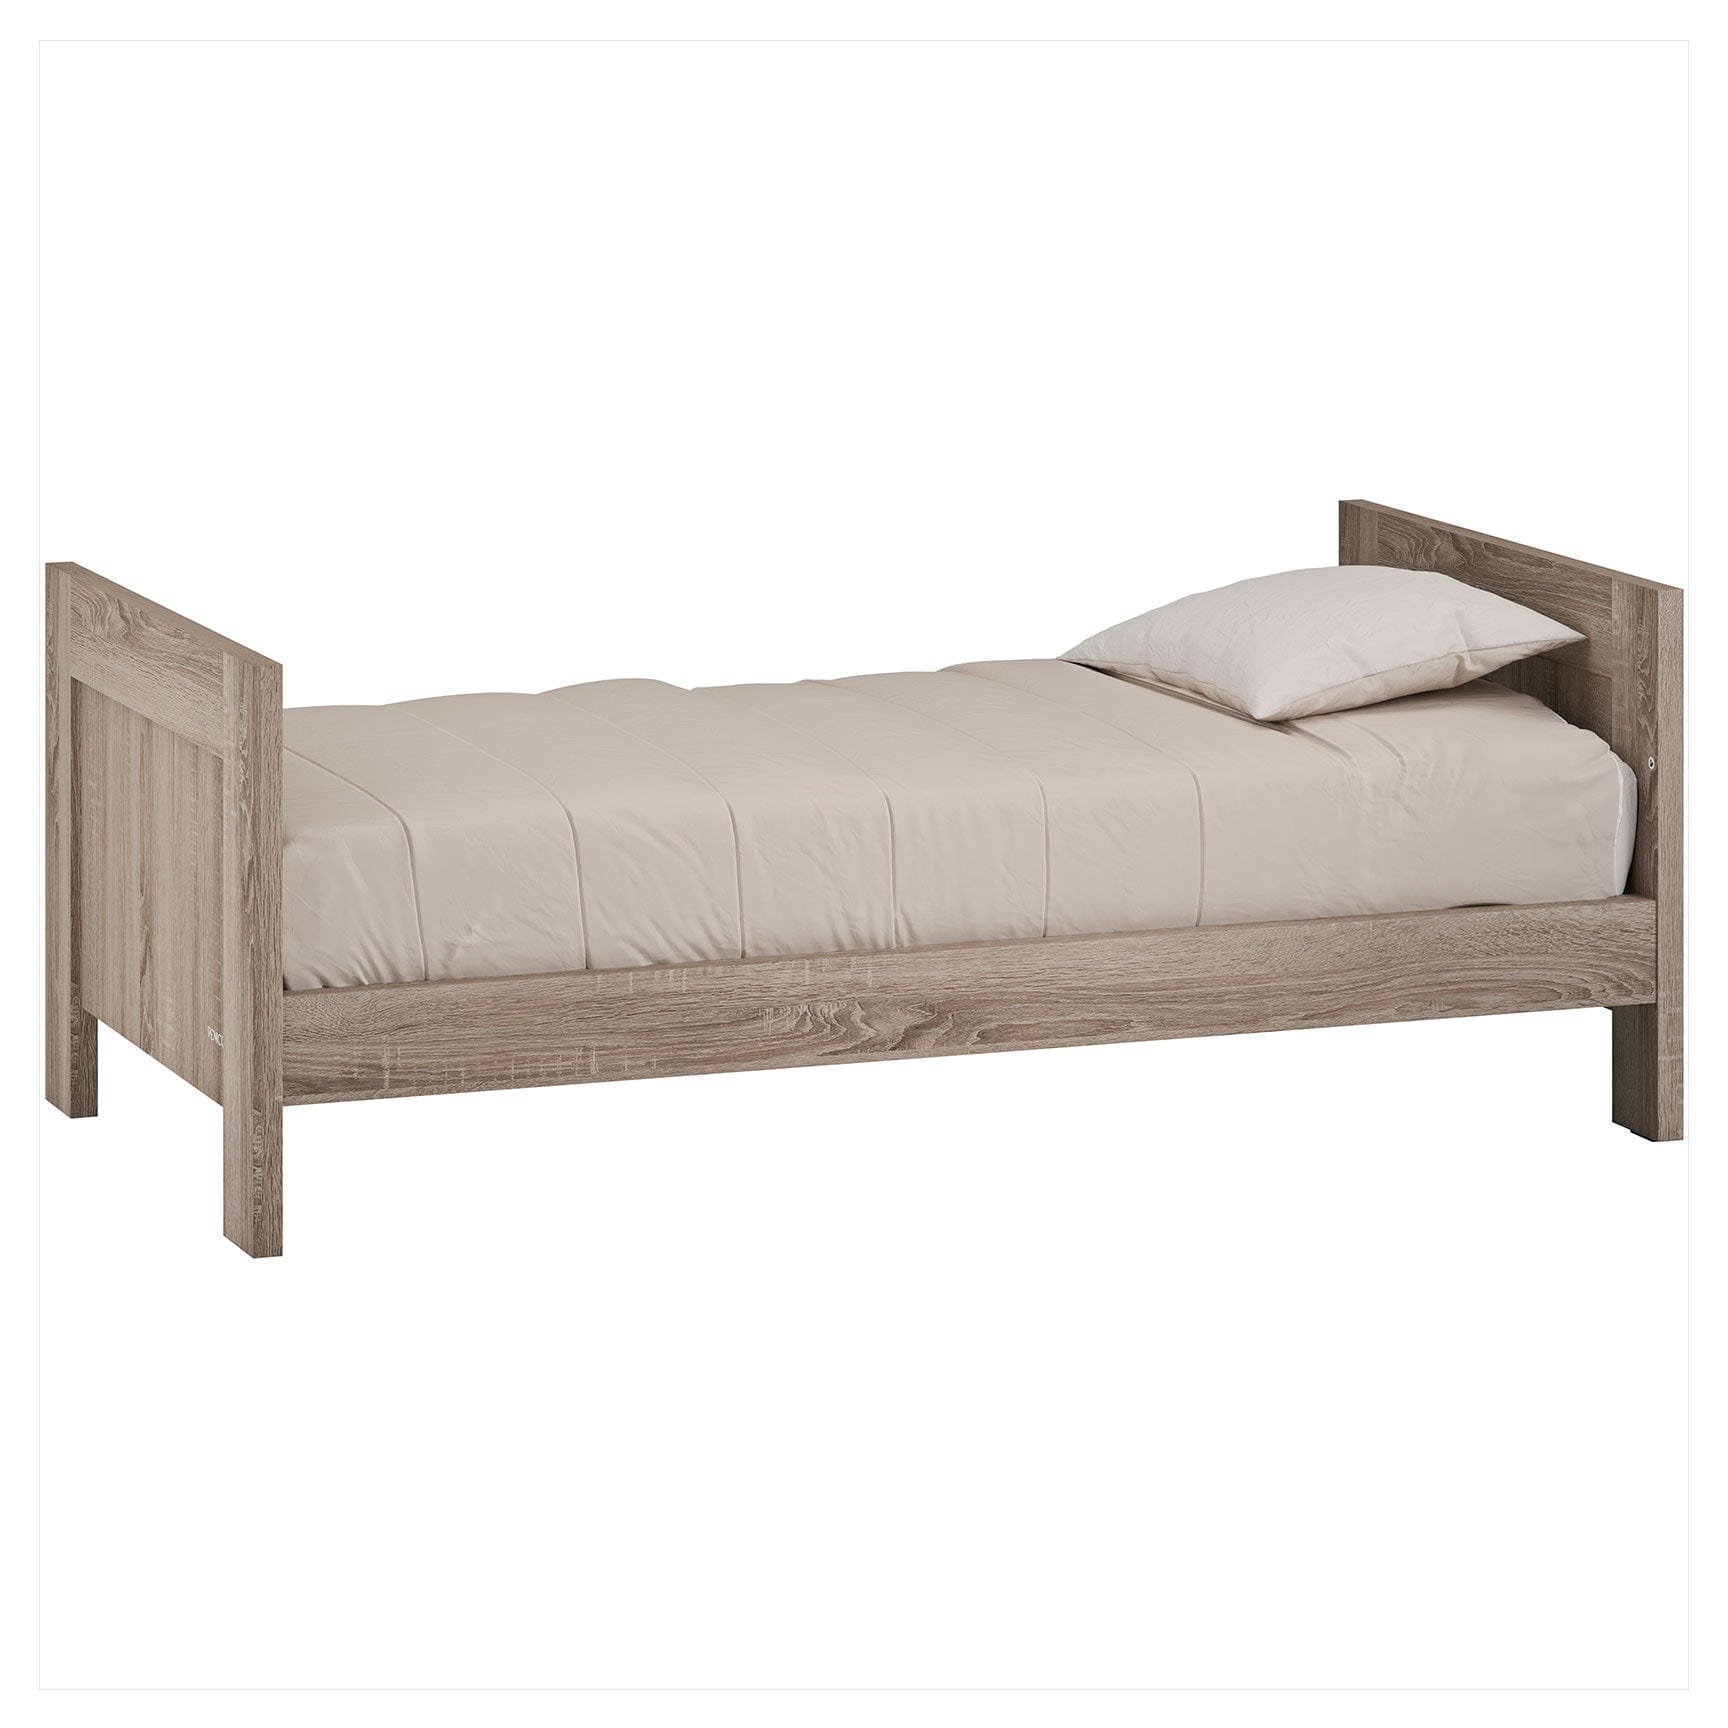 Venicci Cot Beds Venicci Forenzo Truffle Oak Cot Bed with Drawer in Truffle Oak